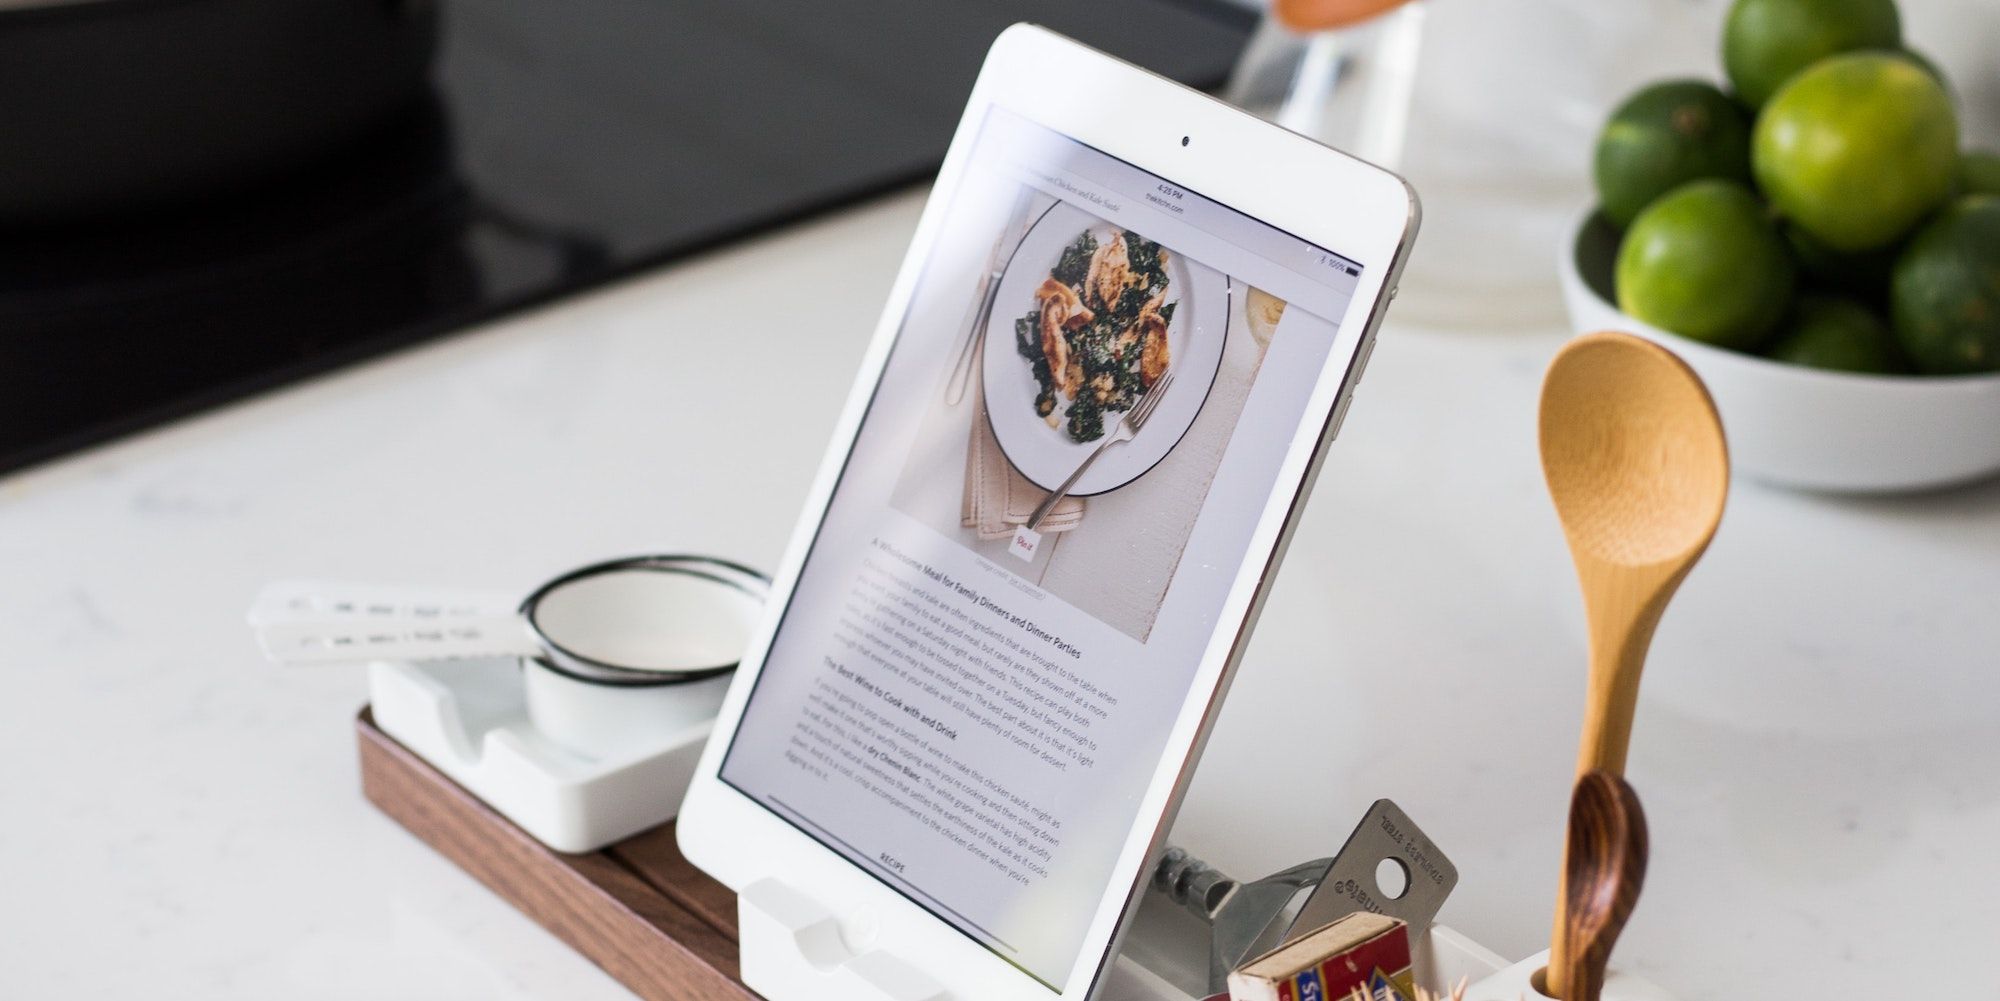 iPad displaying recipes